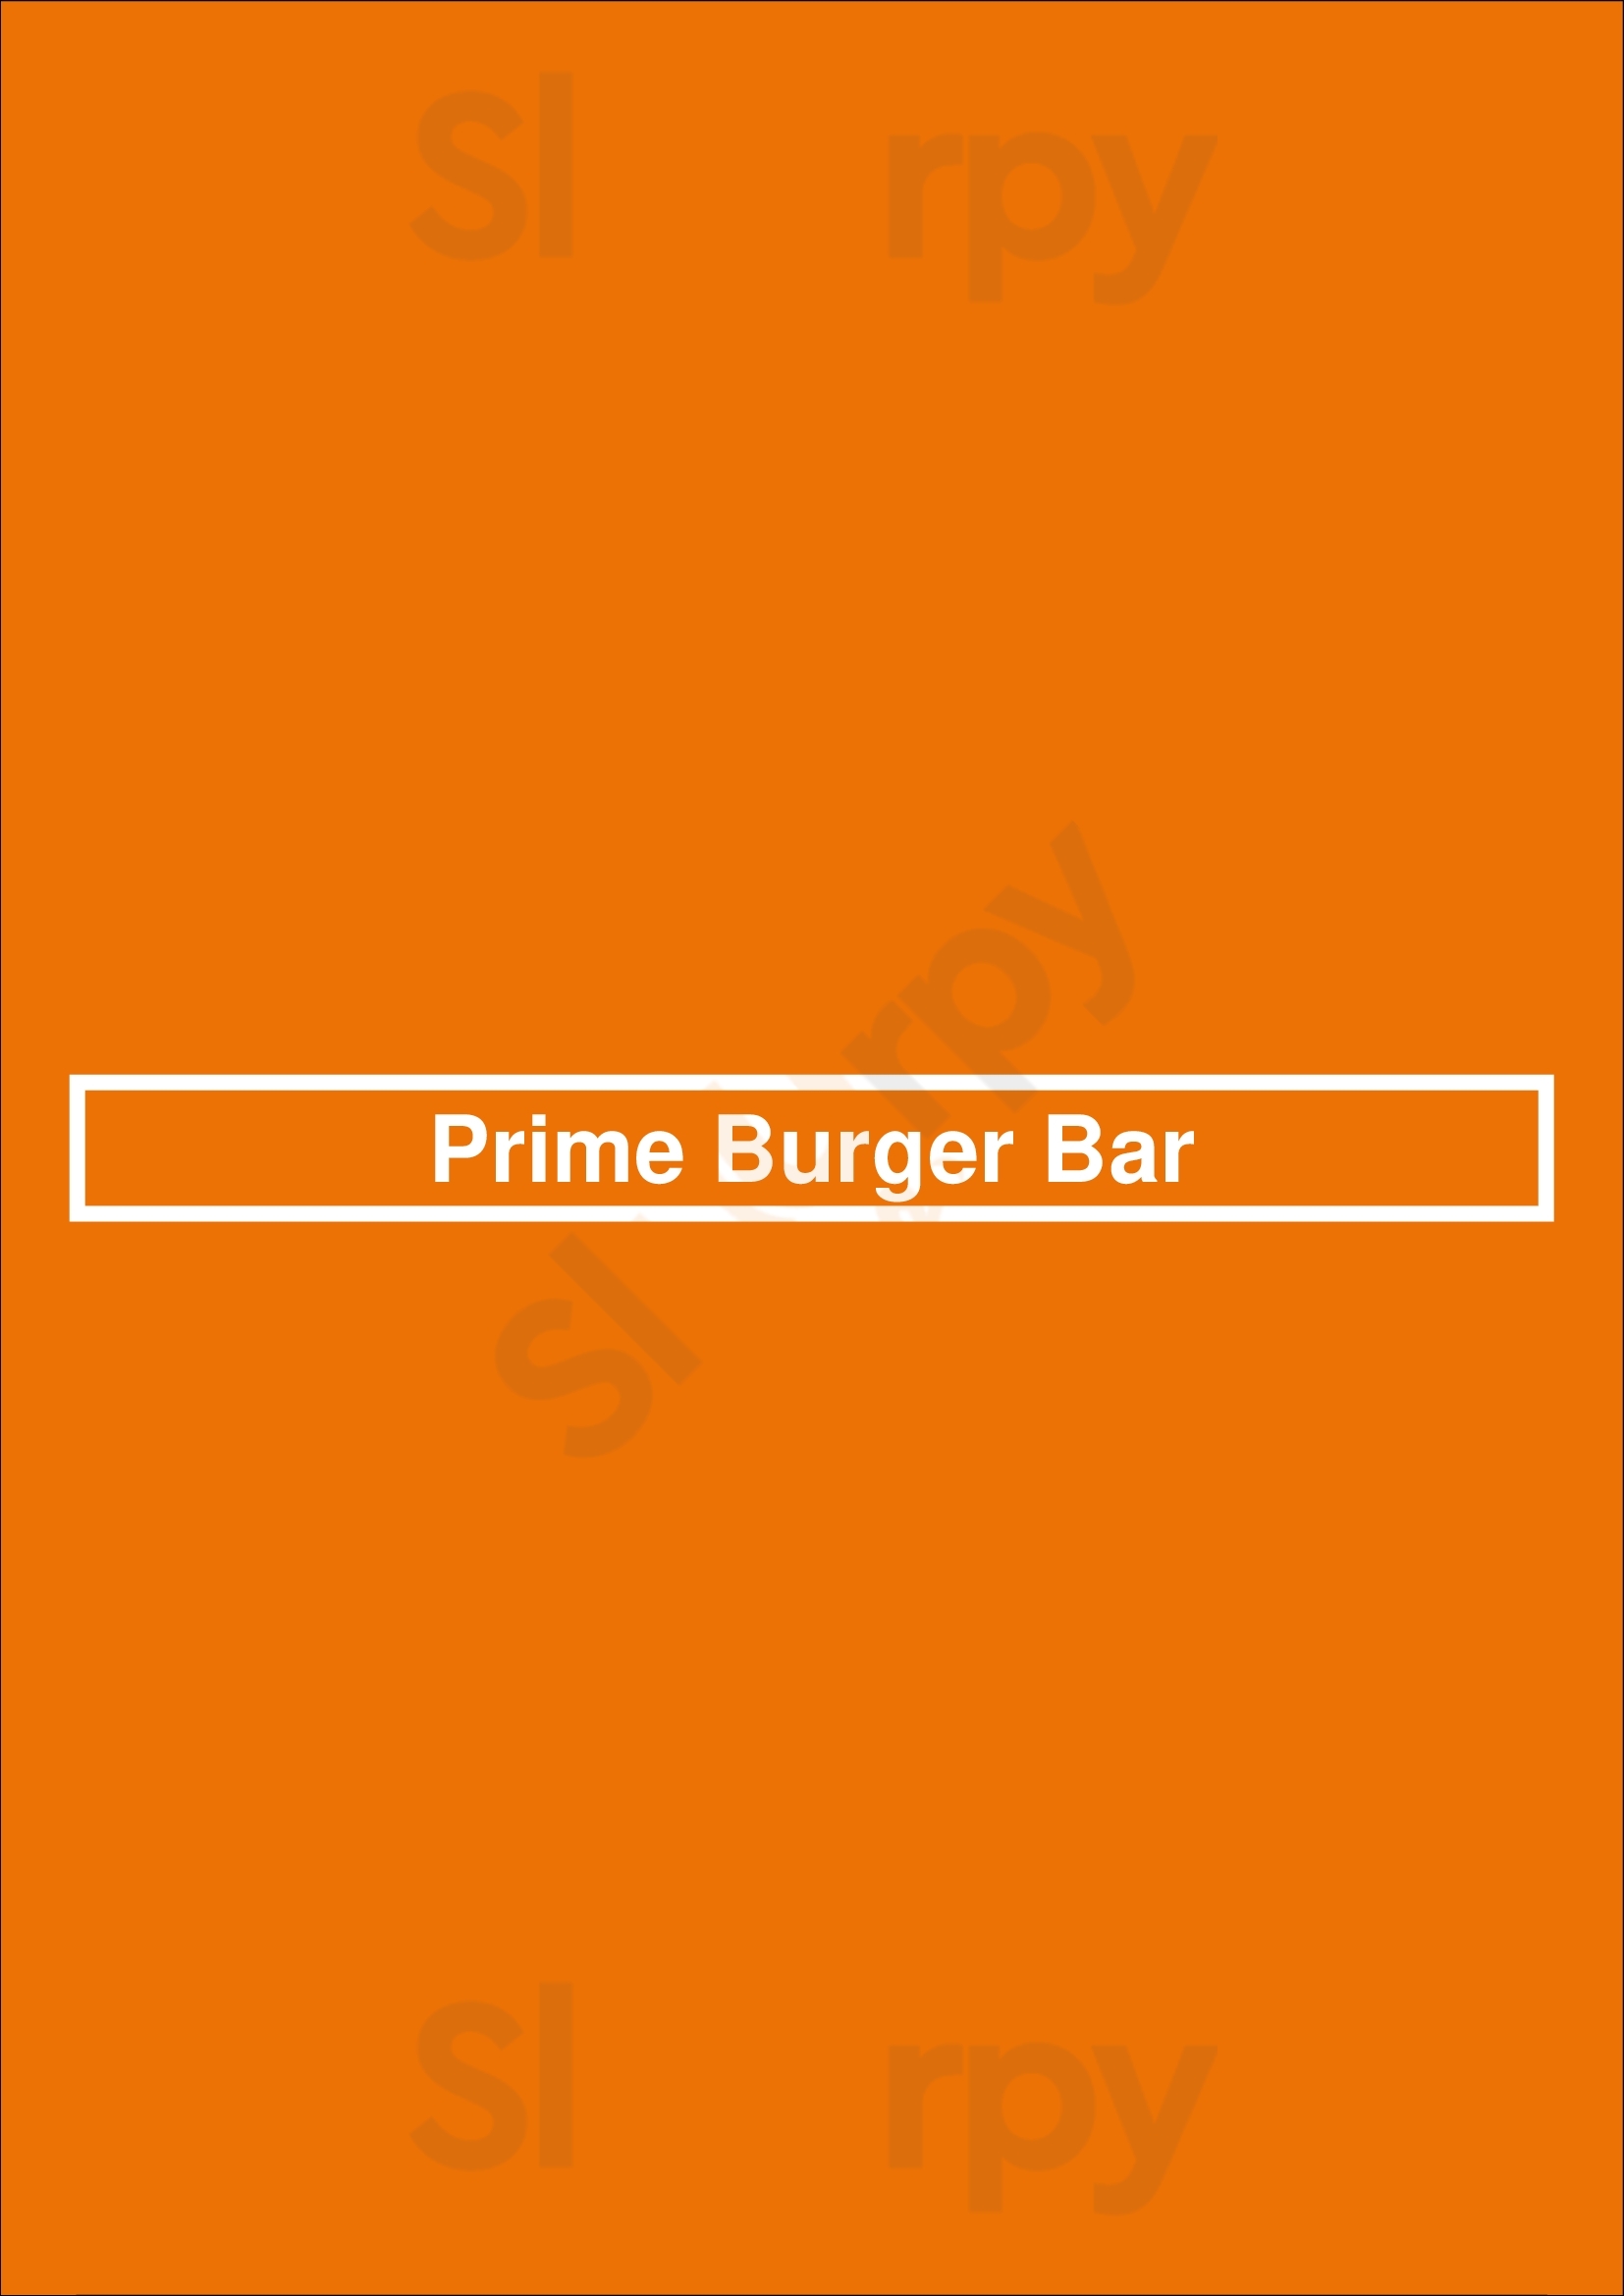 Prime Burger Bar Ottawa Menu - 1